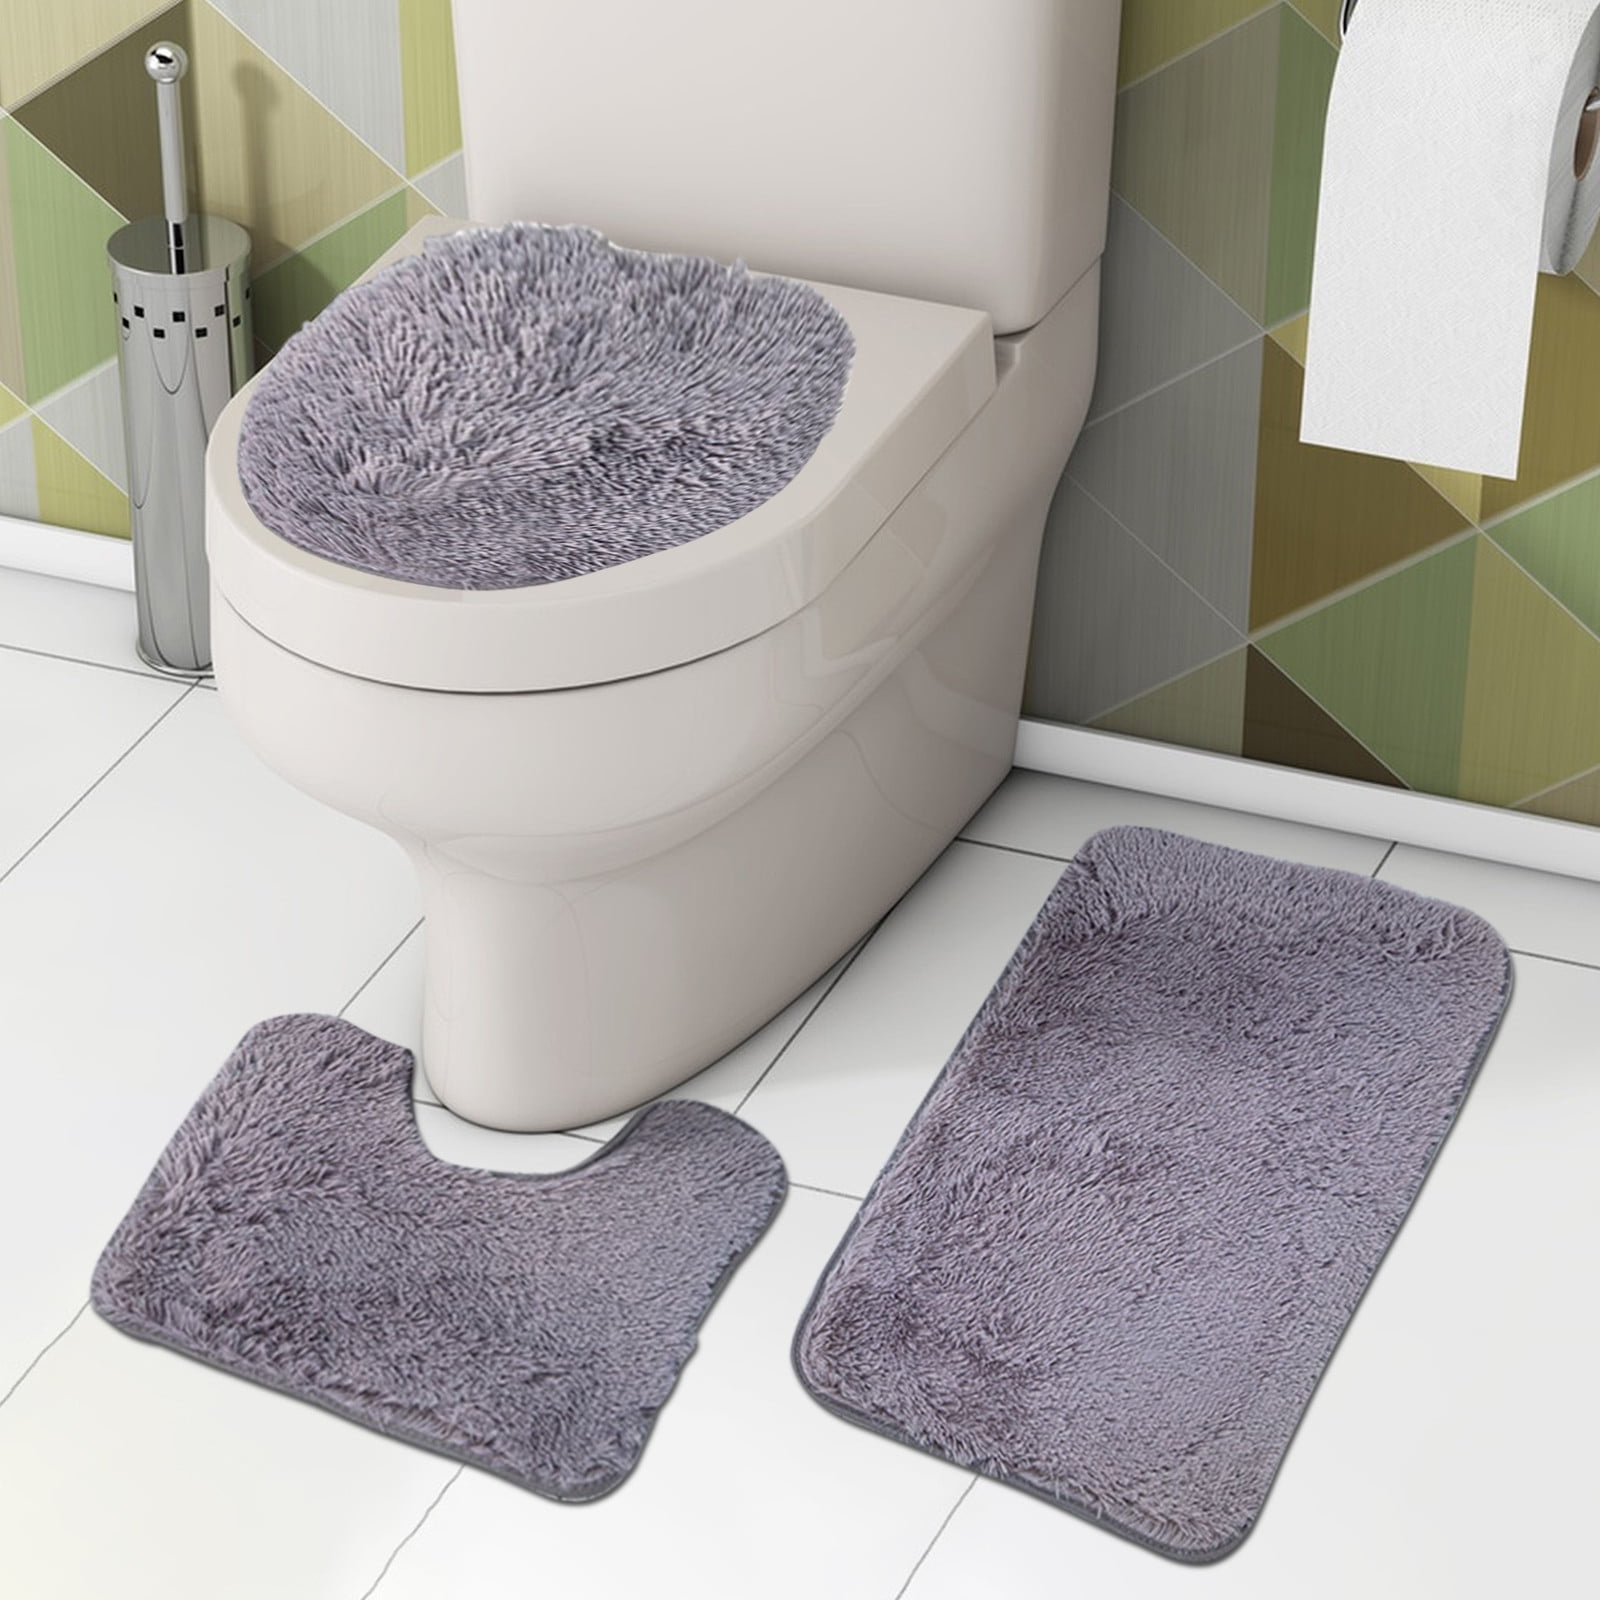 Kokovifyves Home Decor Clearance 3-Piece Bathroom Carpet, Super ...